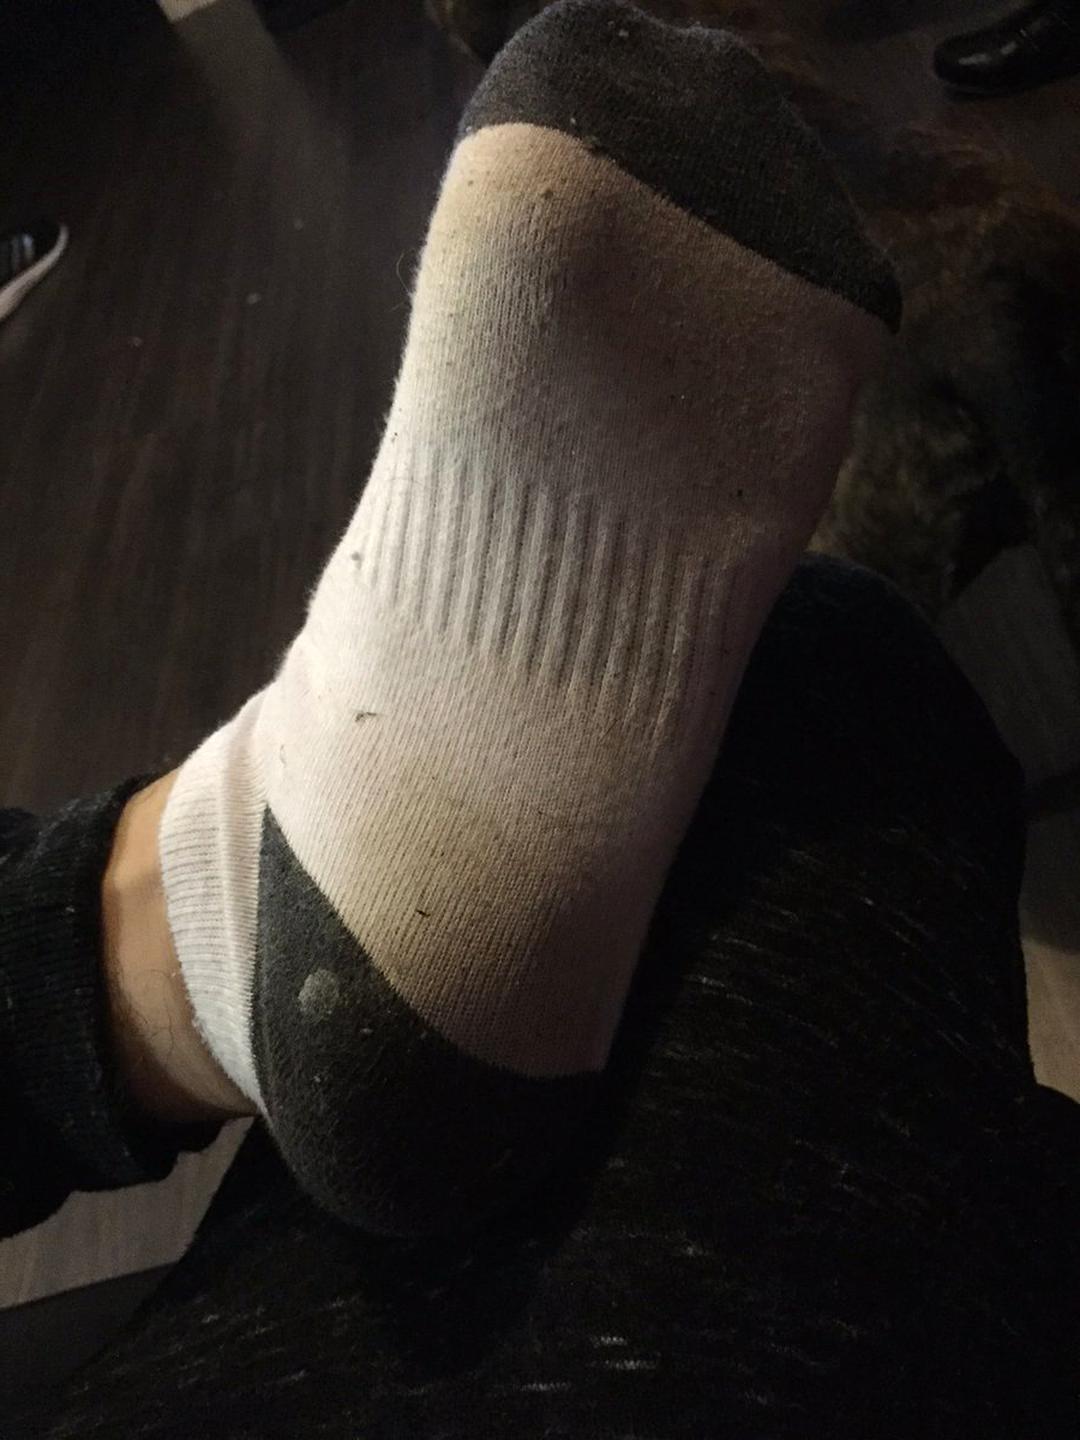 gay men feet socks dirty